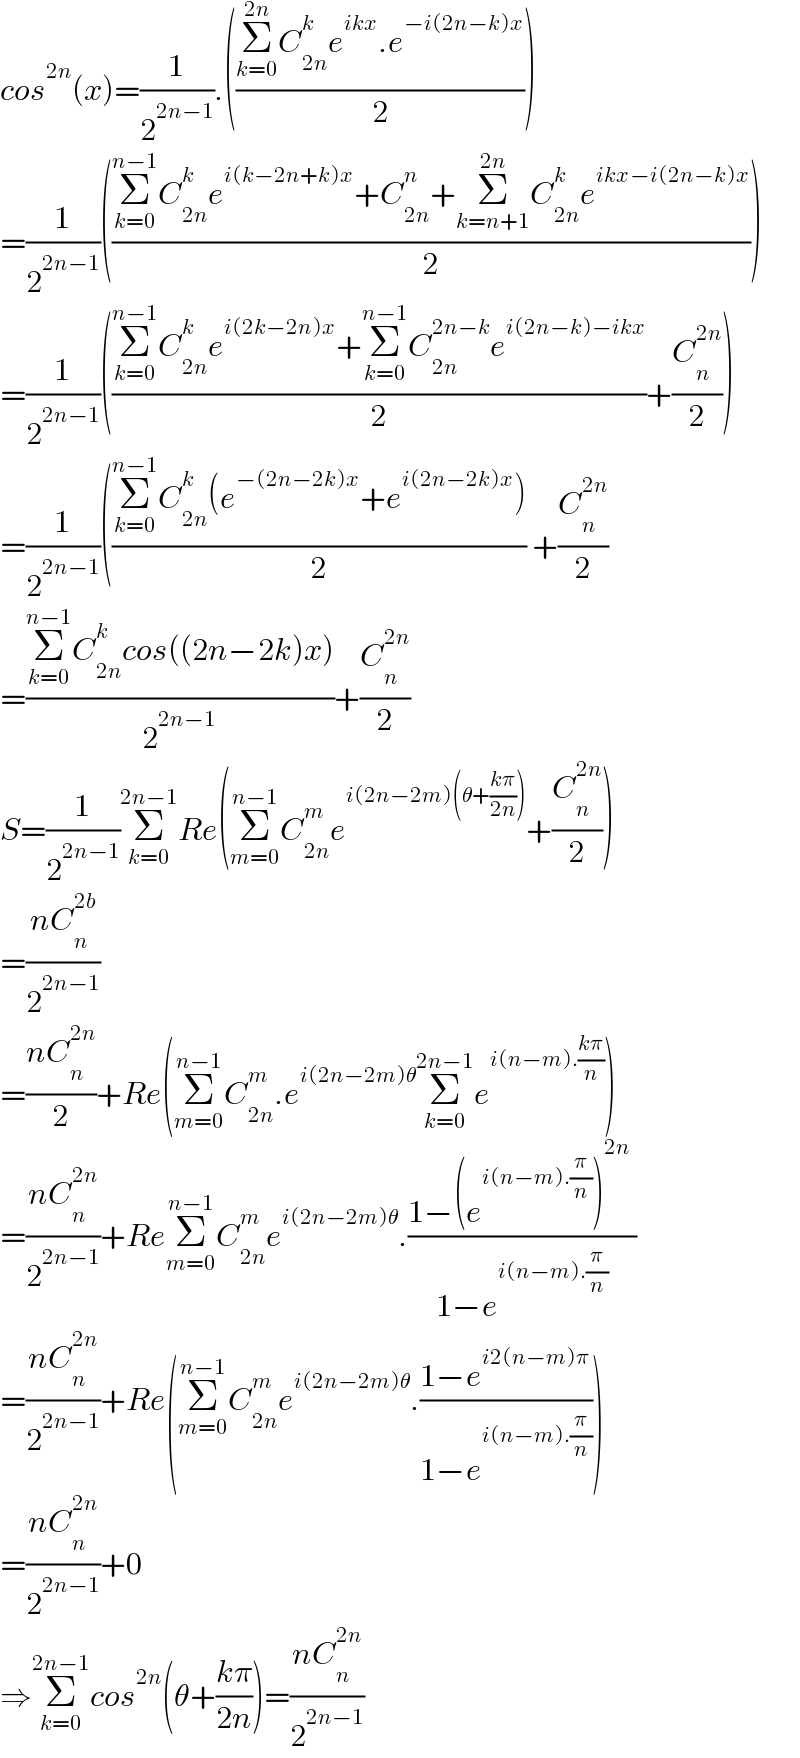 cos^(2n) (x)=(1/2^(2n−1) ).(((Σ_(k=0) ^(2n) C_(2n) ^k e^(ikx) .e^(−i(2n−k)x) )/2))  =(1/2^(2n−1) )(((Σ_(k=0) ^(n−1) C_(2n) ^k e^(i(k−2n+k)x) +C_(2n) ^n +Σ_(k=n+1) ^(2n) C_(2n) ^k e^(ikx−i(2n−k)x) )/2))  =(1/2^(2n−1) )(((Σ_(k=0) ^(n−1) C_(2n) ^k e^(i(2k−2n)x) +Σ_(k=0) ^(n−1) C_(2n) ^(2n−k) e^(i(2n−k)−ikx) )/2)+(C_n ^(2n) /2))  =(1/2^(2n−1) )(((Σ_(k=0) ^(n−1) C_(2n) ^k (e^(−(2n−2k)x) +e^(i(2n−2k)x) ))/2) +(C_n ^(2n) /2)  =((Σ_(k=0) ^(n−1) C_(2n) ^k cos((2n−2k)x))/2^(2n−1) )+(C_n ^(2n) /2)  S=(1/2^(2n−1) )Σ_(k=0) ^(2n−1) Re(Σ_(m=0) ^(n−1) C_(2n) ^m e^(i(2n−2m)(θ+((kπ)/(2n)))) +(C_n ^(2n) /2))  =((nC_n ^(2b) )/2^(2n−1) )  =((nC_n ^(2n) )/2)+Re(Σ_(m=0) ^(n−1) C_(2n) ^m .e^(i(2n−2m)θ) Σ_(k=0) ^(2n−1) e^(i(n−m).((kπ)/n)) )  =((nC_n ^(2n) )/2^(2n−1) )+ReΣ_(m=0) ^(n−1) C_(2n) ^m e^(i(2n−2m)θ) .((1−(e^(i(n−m).(π/n)) )^(2n)  )/(1−e^(i(n−m).(π/n)) ))  =((nC_n ^(2n) )/2^(2n−1) )+Re(Σ_(m=0) ^(n−1) C_(2n) ^m e^(i(2n−2m)θ) .((1−e^(i2(n−m)π) )/(1−e^(i(n−m).(π/n)) )))  =((nC_n ^(2n) )/2^(2n−1) )+0  ⇒Σ_(k=0) ^(2n−1) cos^(2n) (θ+((kπ)/(2n)))=((nC_n ^(2n) )/2^(2n−1) )  